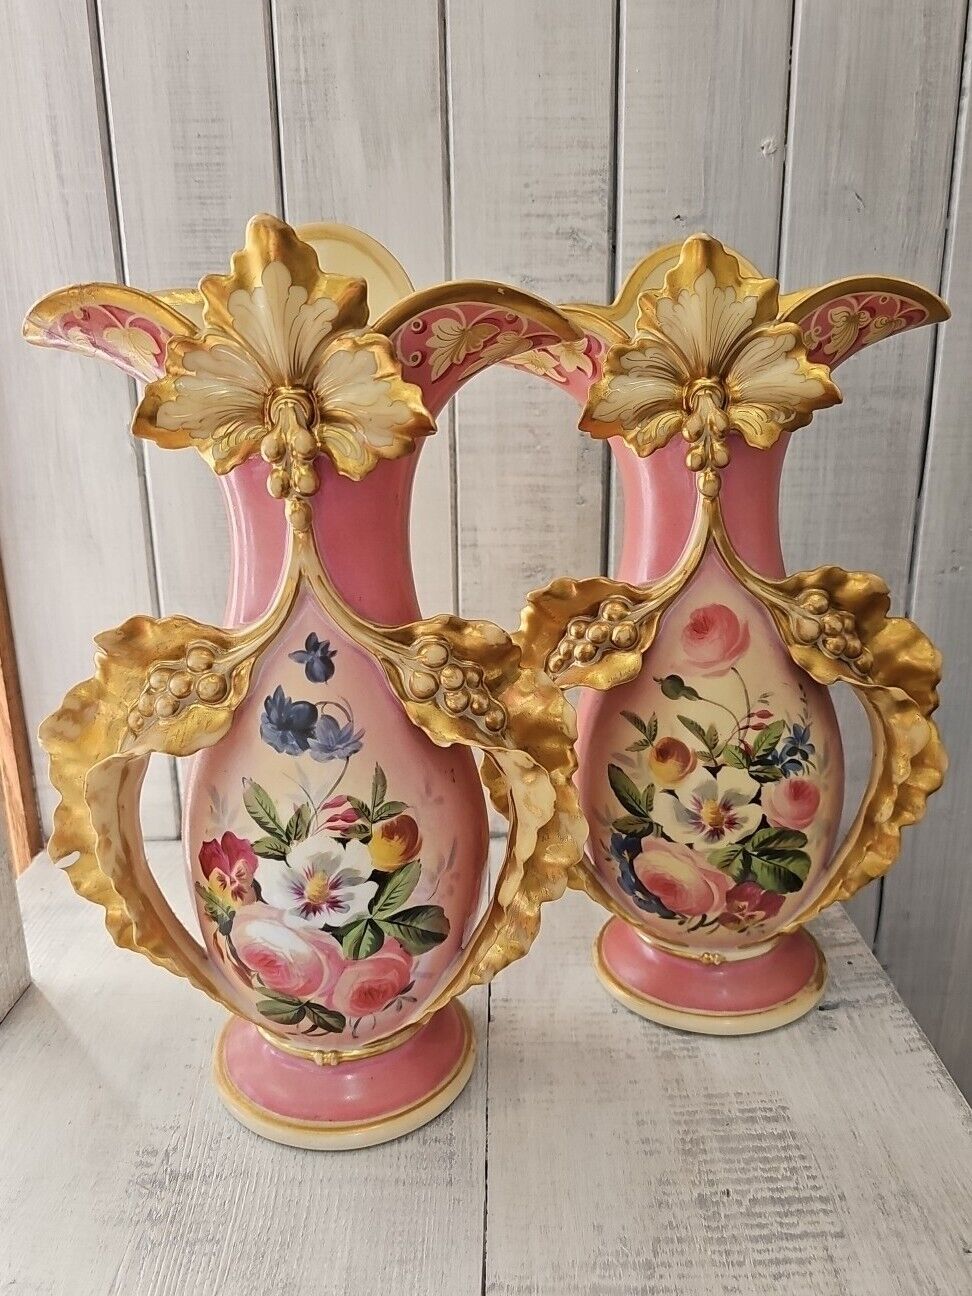 Antique c1850 Paris Porcelain Napoleon III Mantle Vases, Gilded, Hand Painted